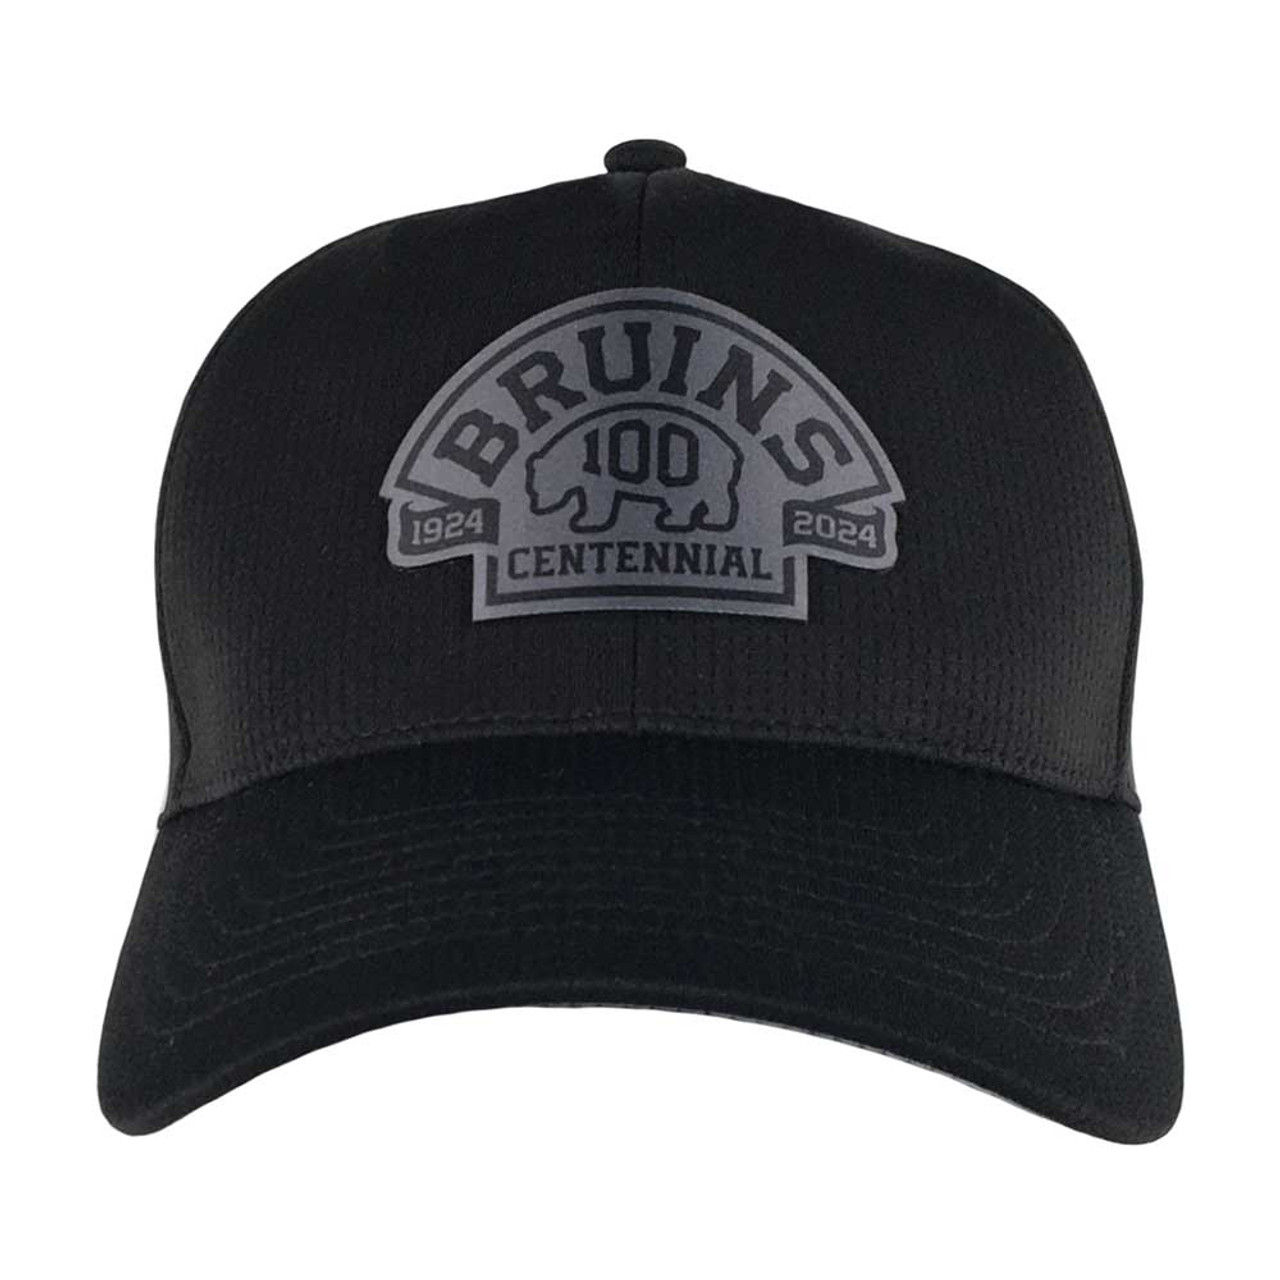 Boston Bruins MONOCHROME XL-LOGO Grey-Black Fitted Hat